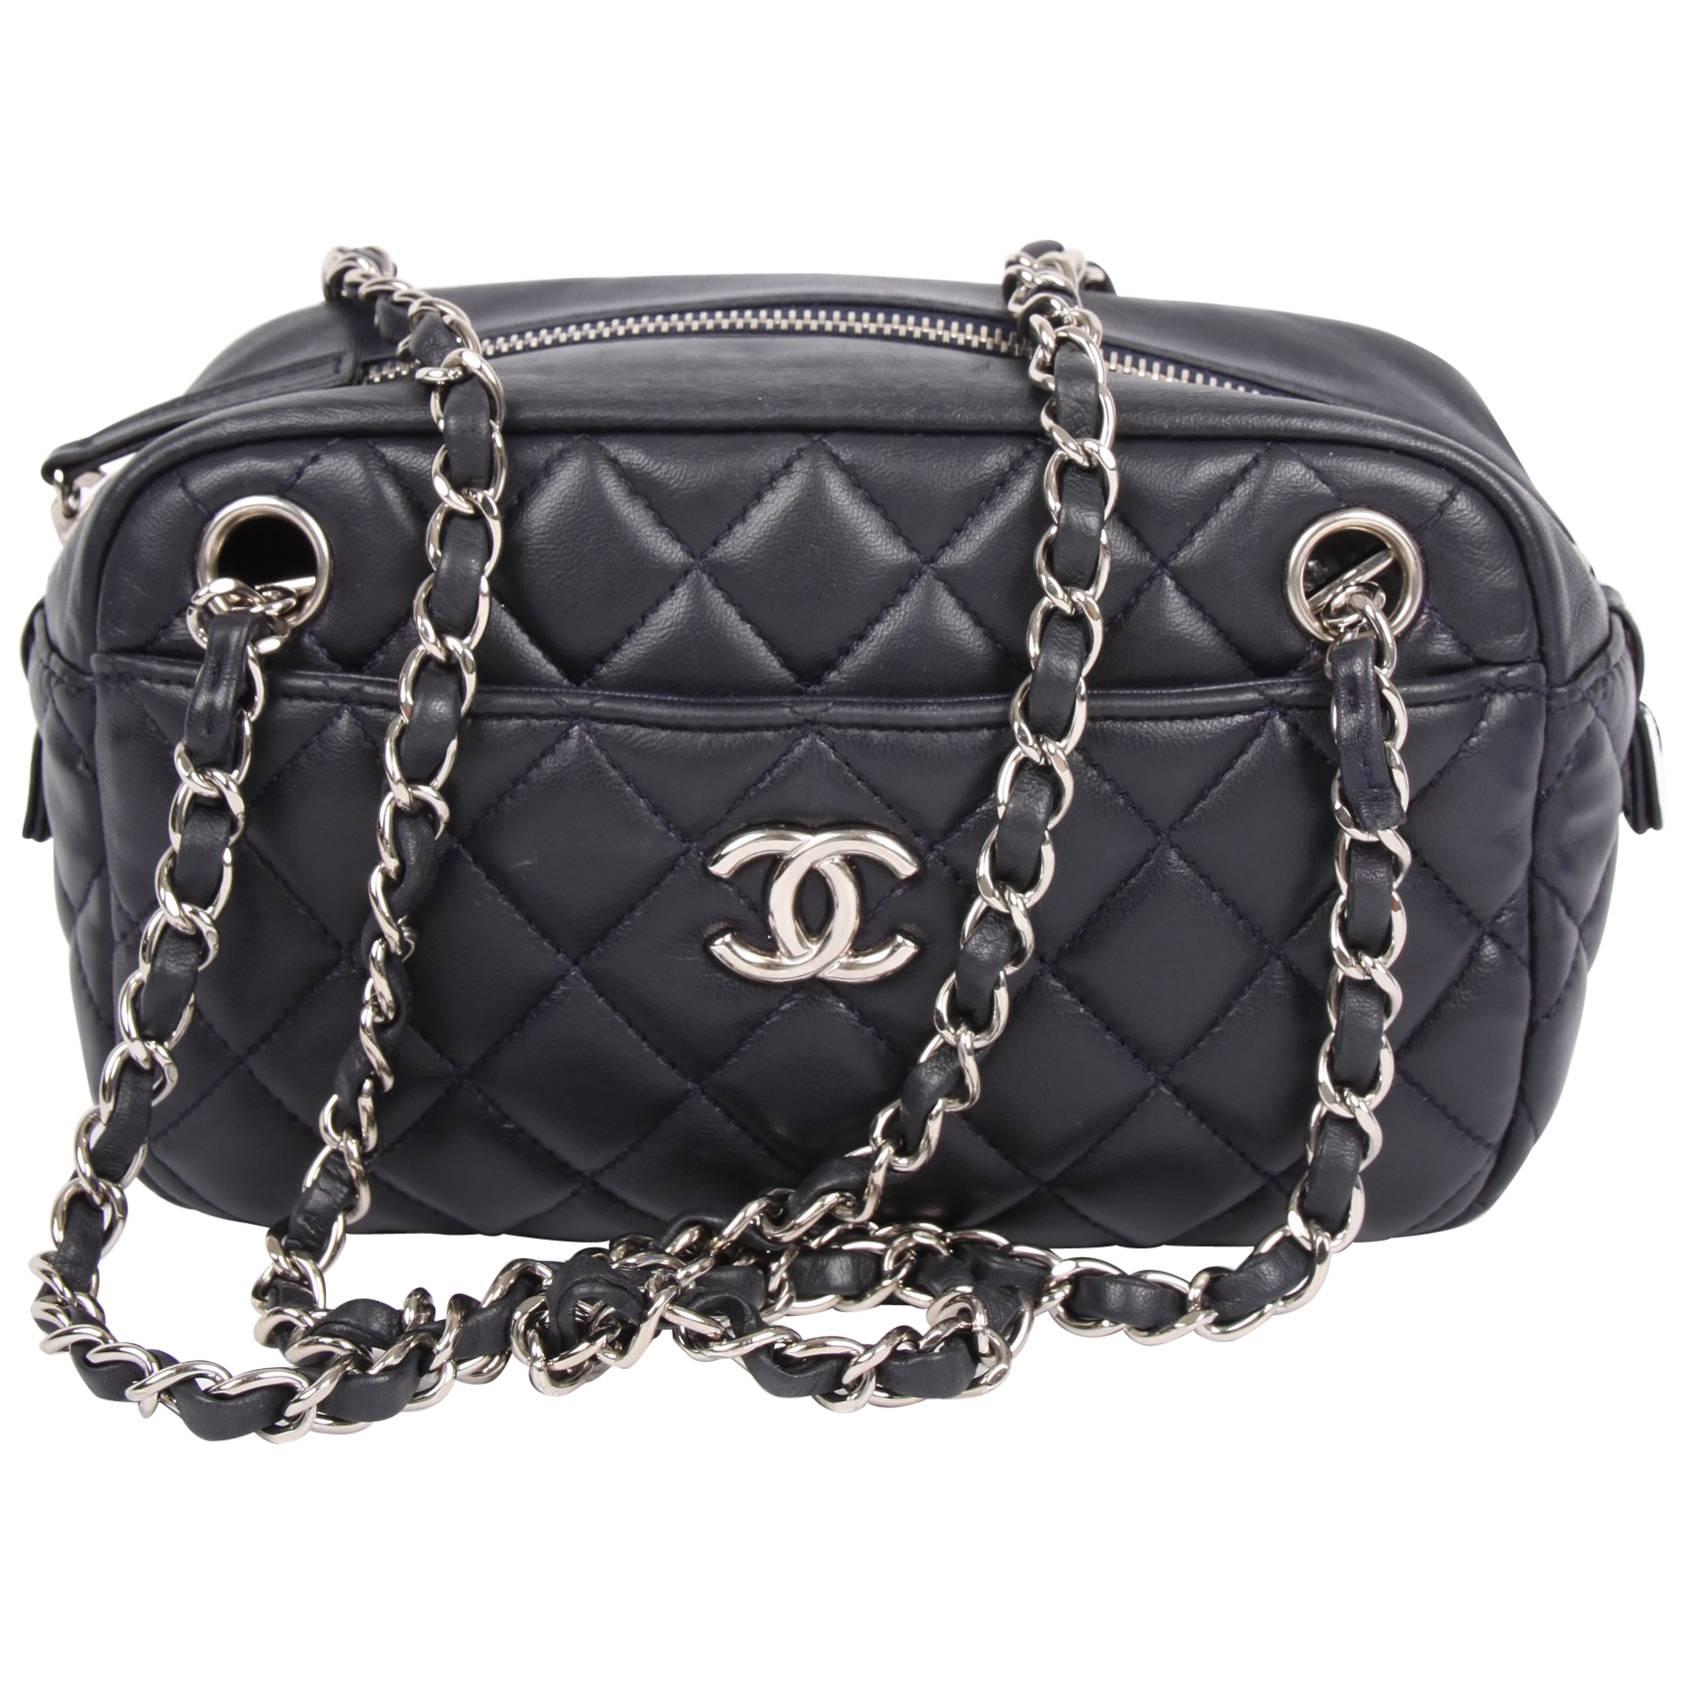 Chanel Classic 2.55 Camera Case Bag - dark blue leather